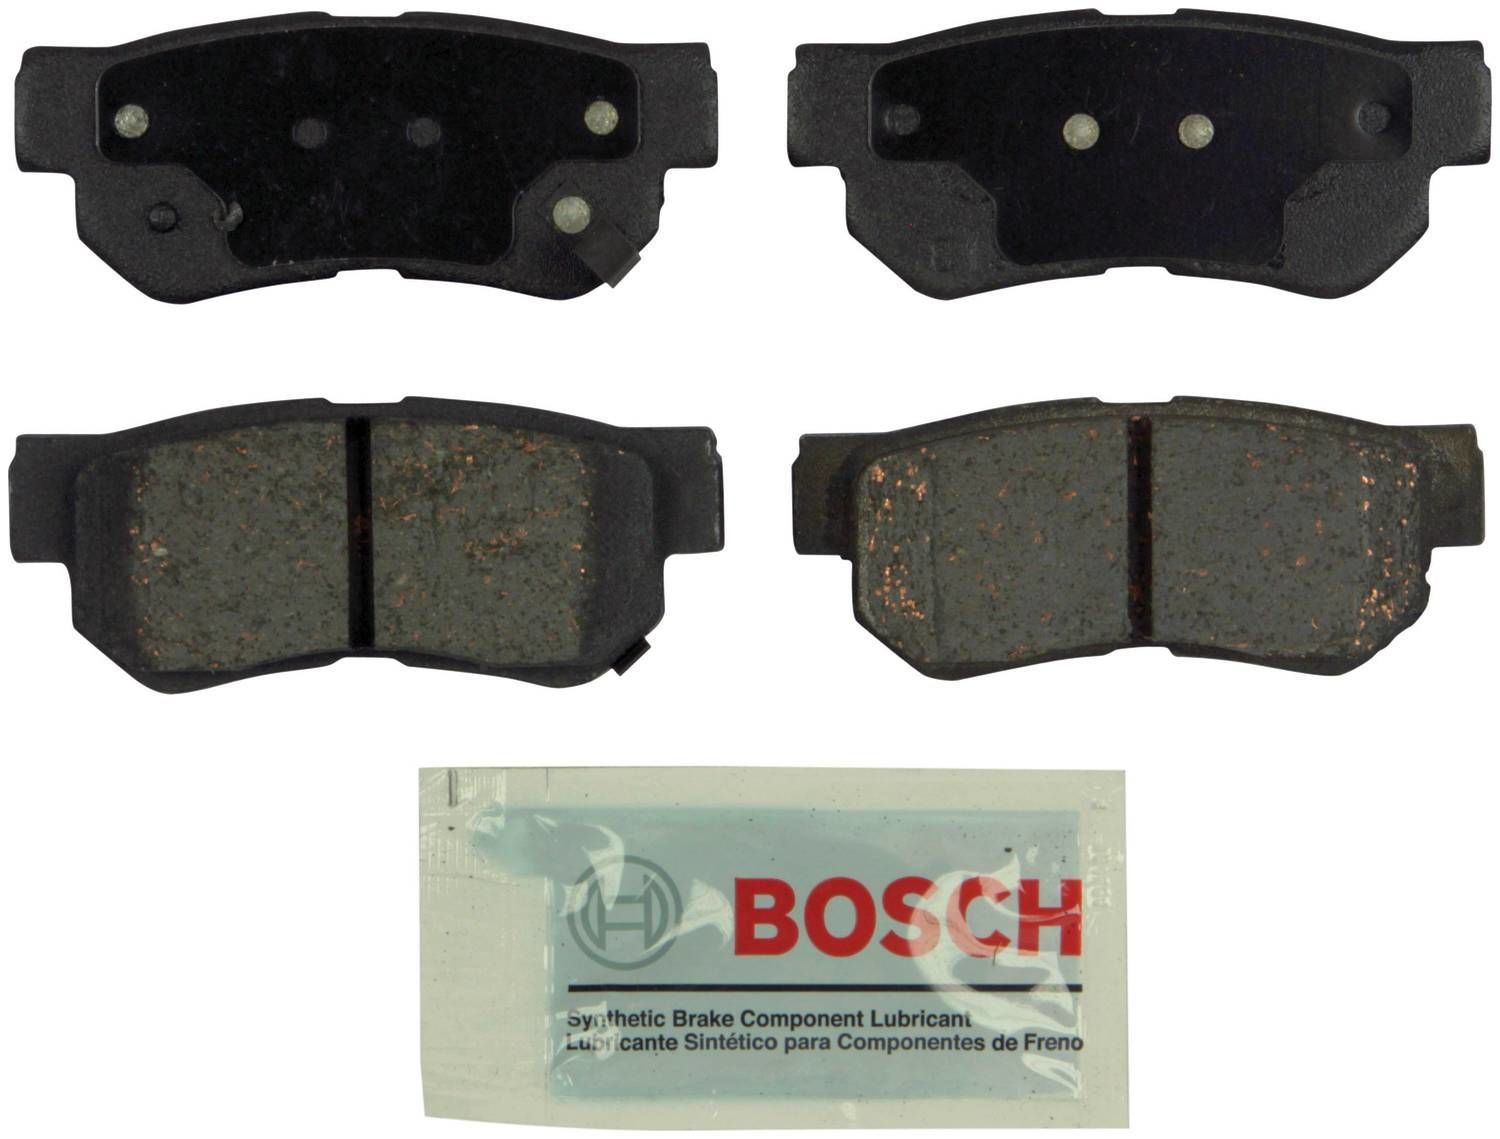 BOSCH BRAKE - Bosch Blue Ceramic Brake Pads (Rear) - BQC BE813